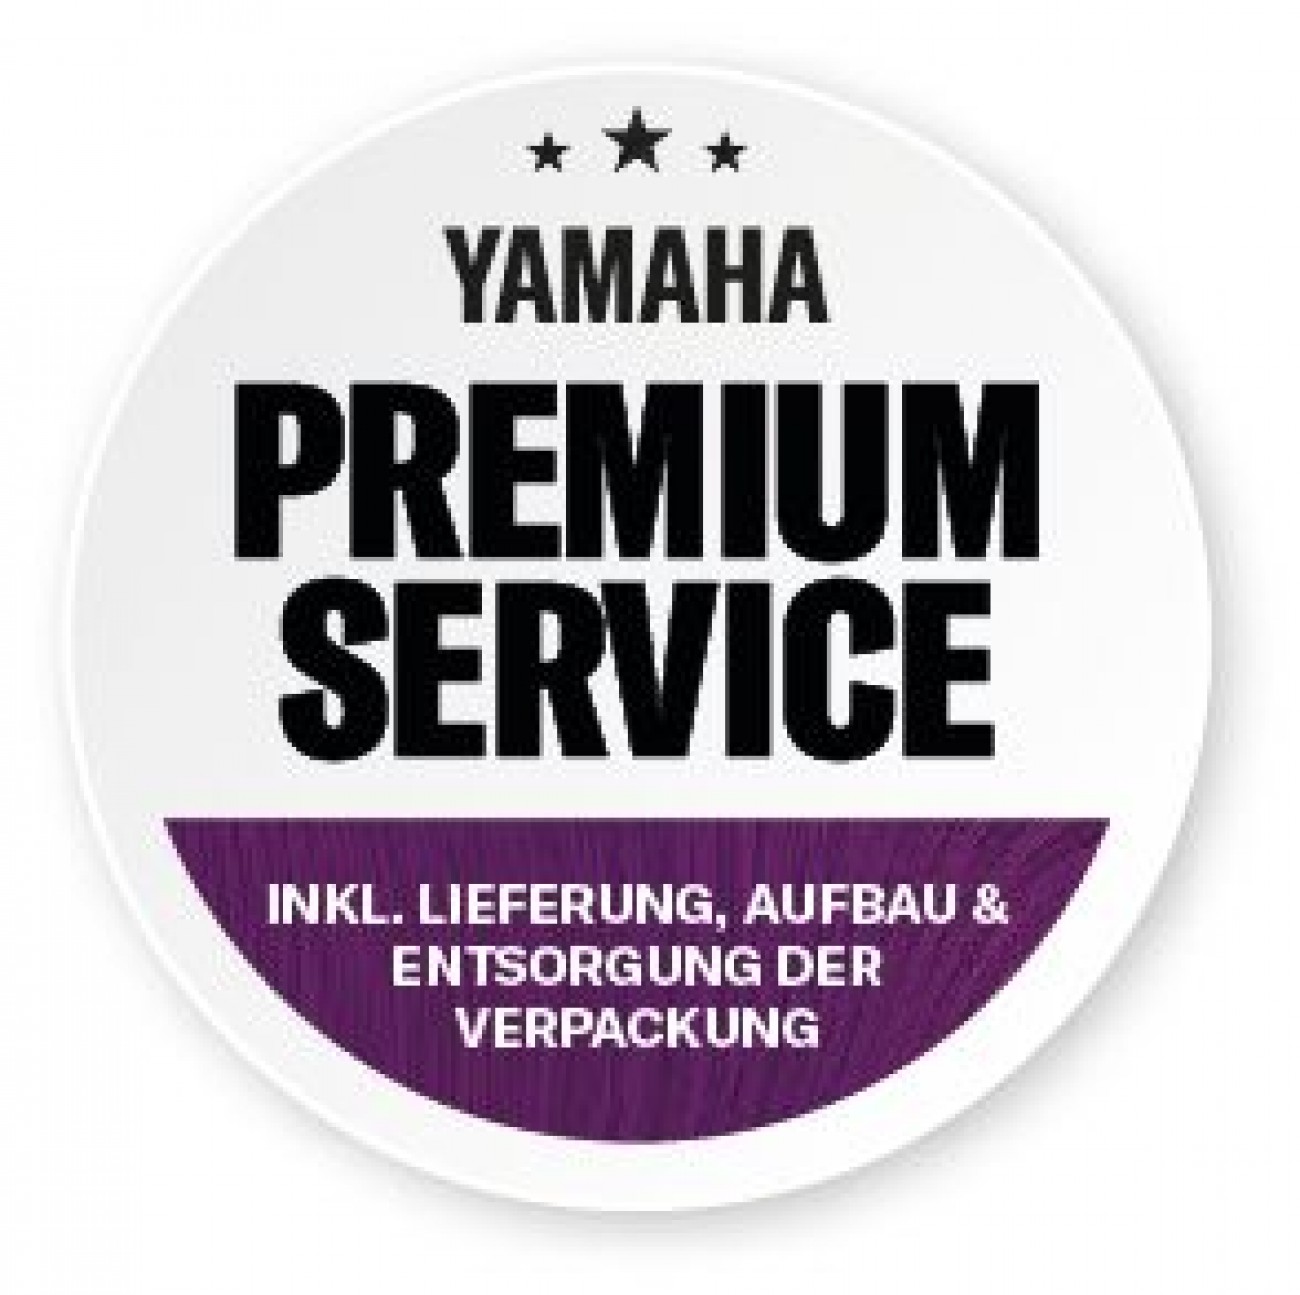 YAMAHA PREMIUM SERVICE